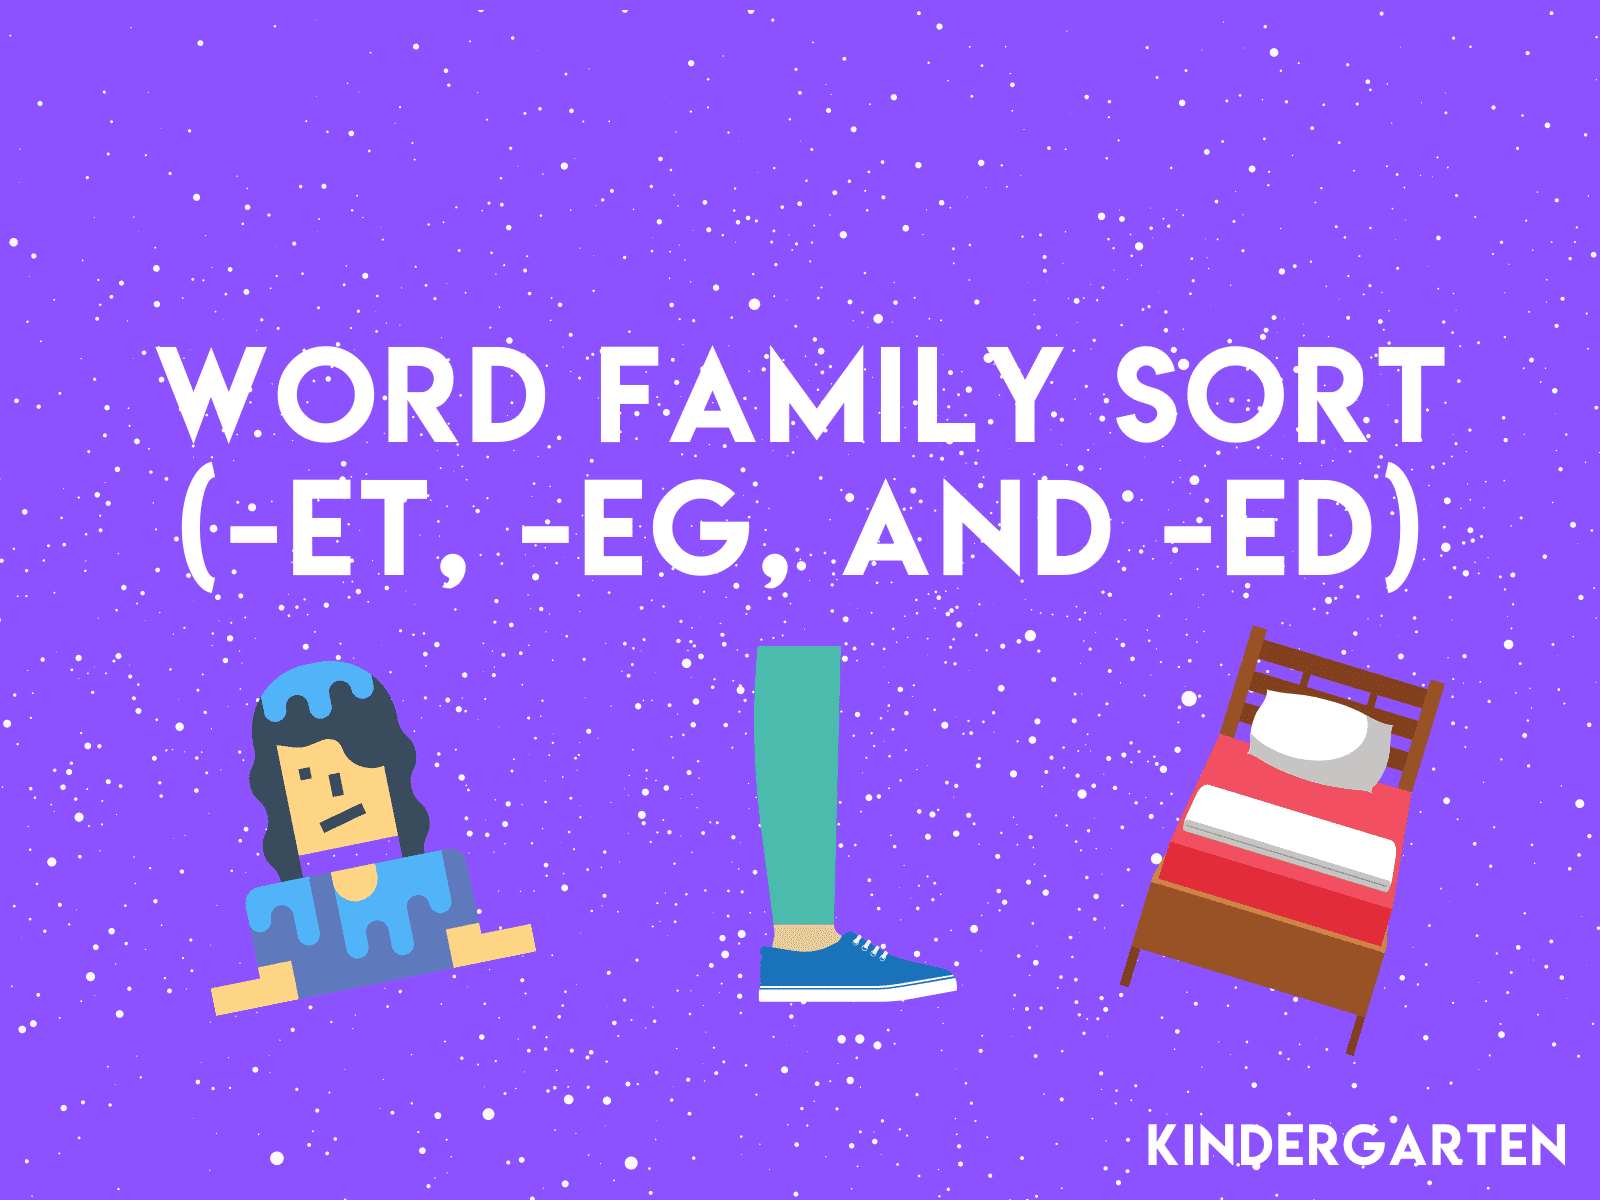 Word Family Sort | Free kindergarten learning resource for -et, -eg, and -ed sounds